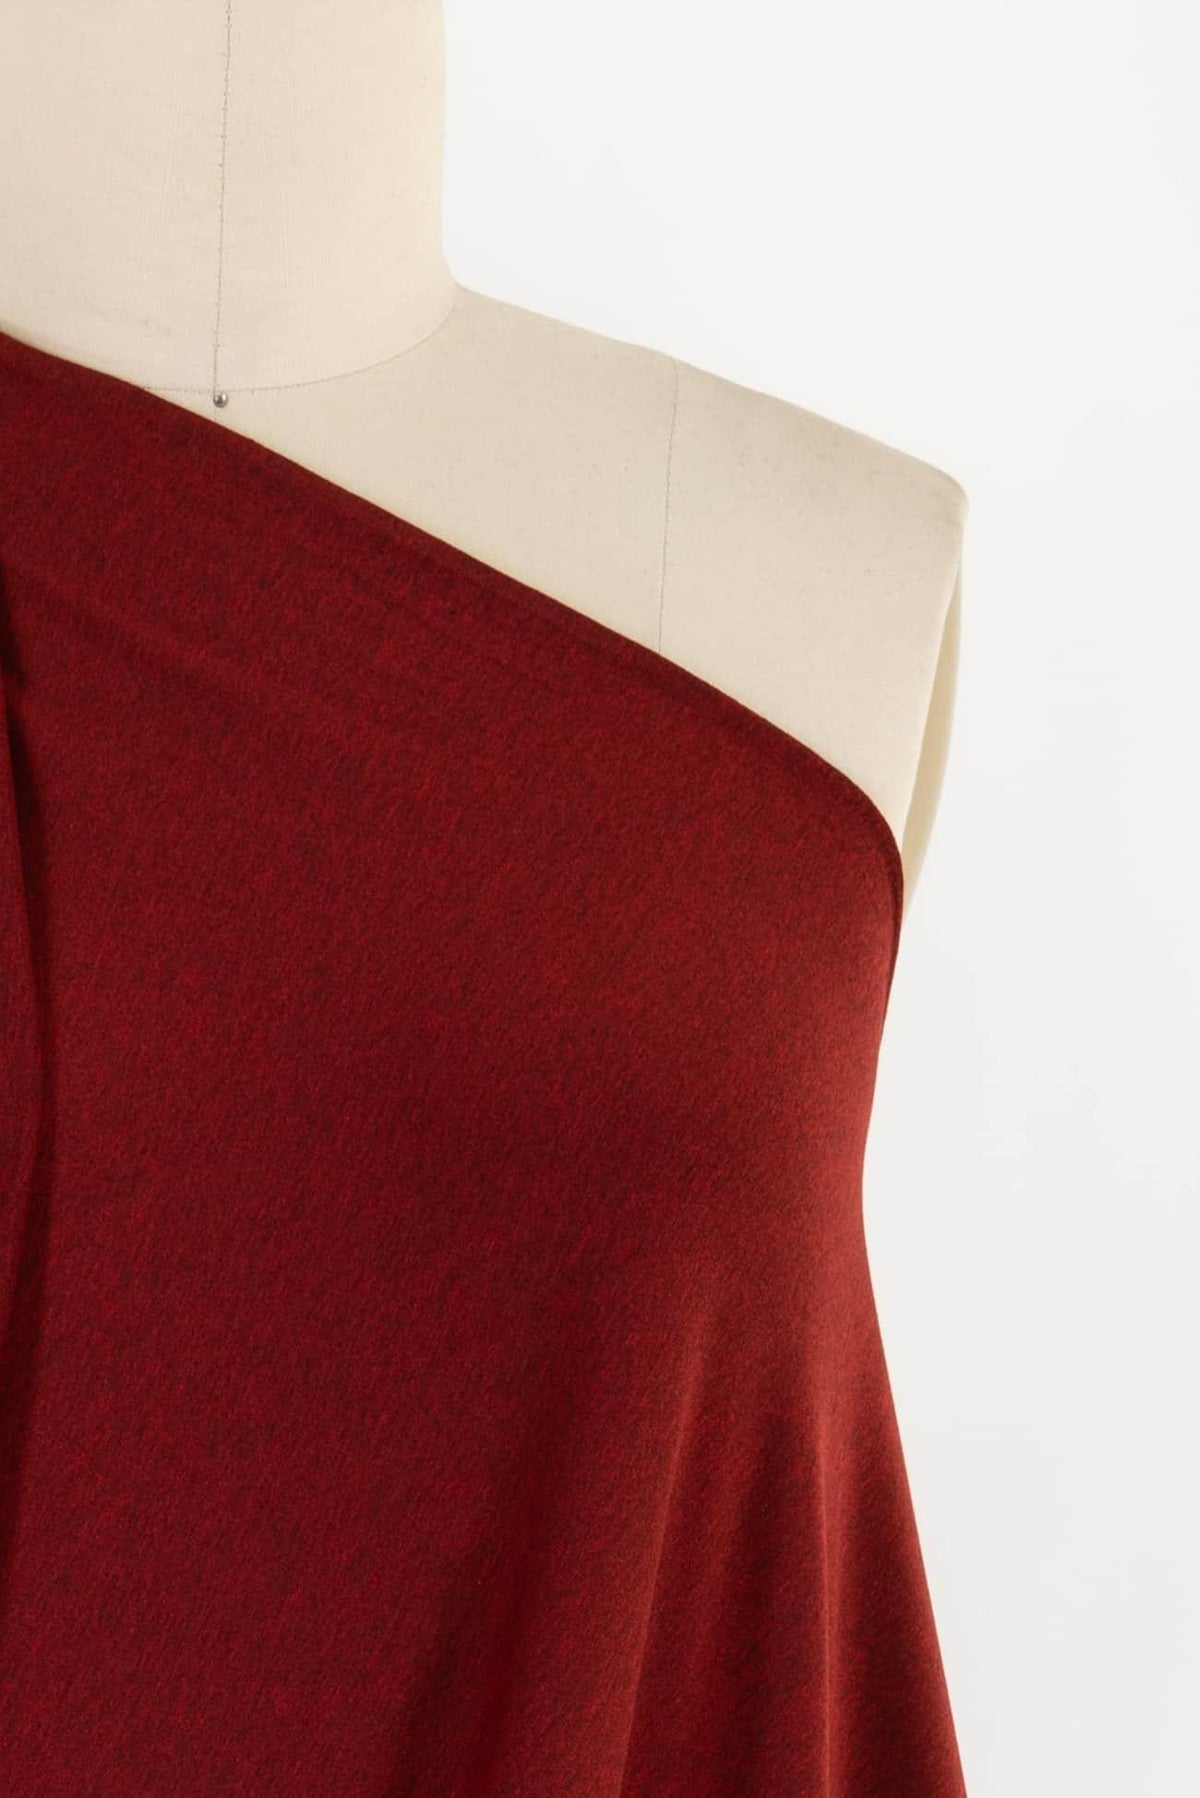 Red Chili USA Knit - Marcy Tilton Fabrics